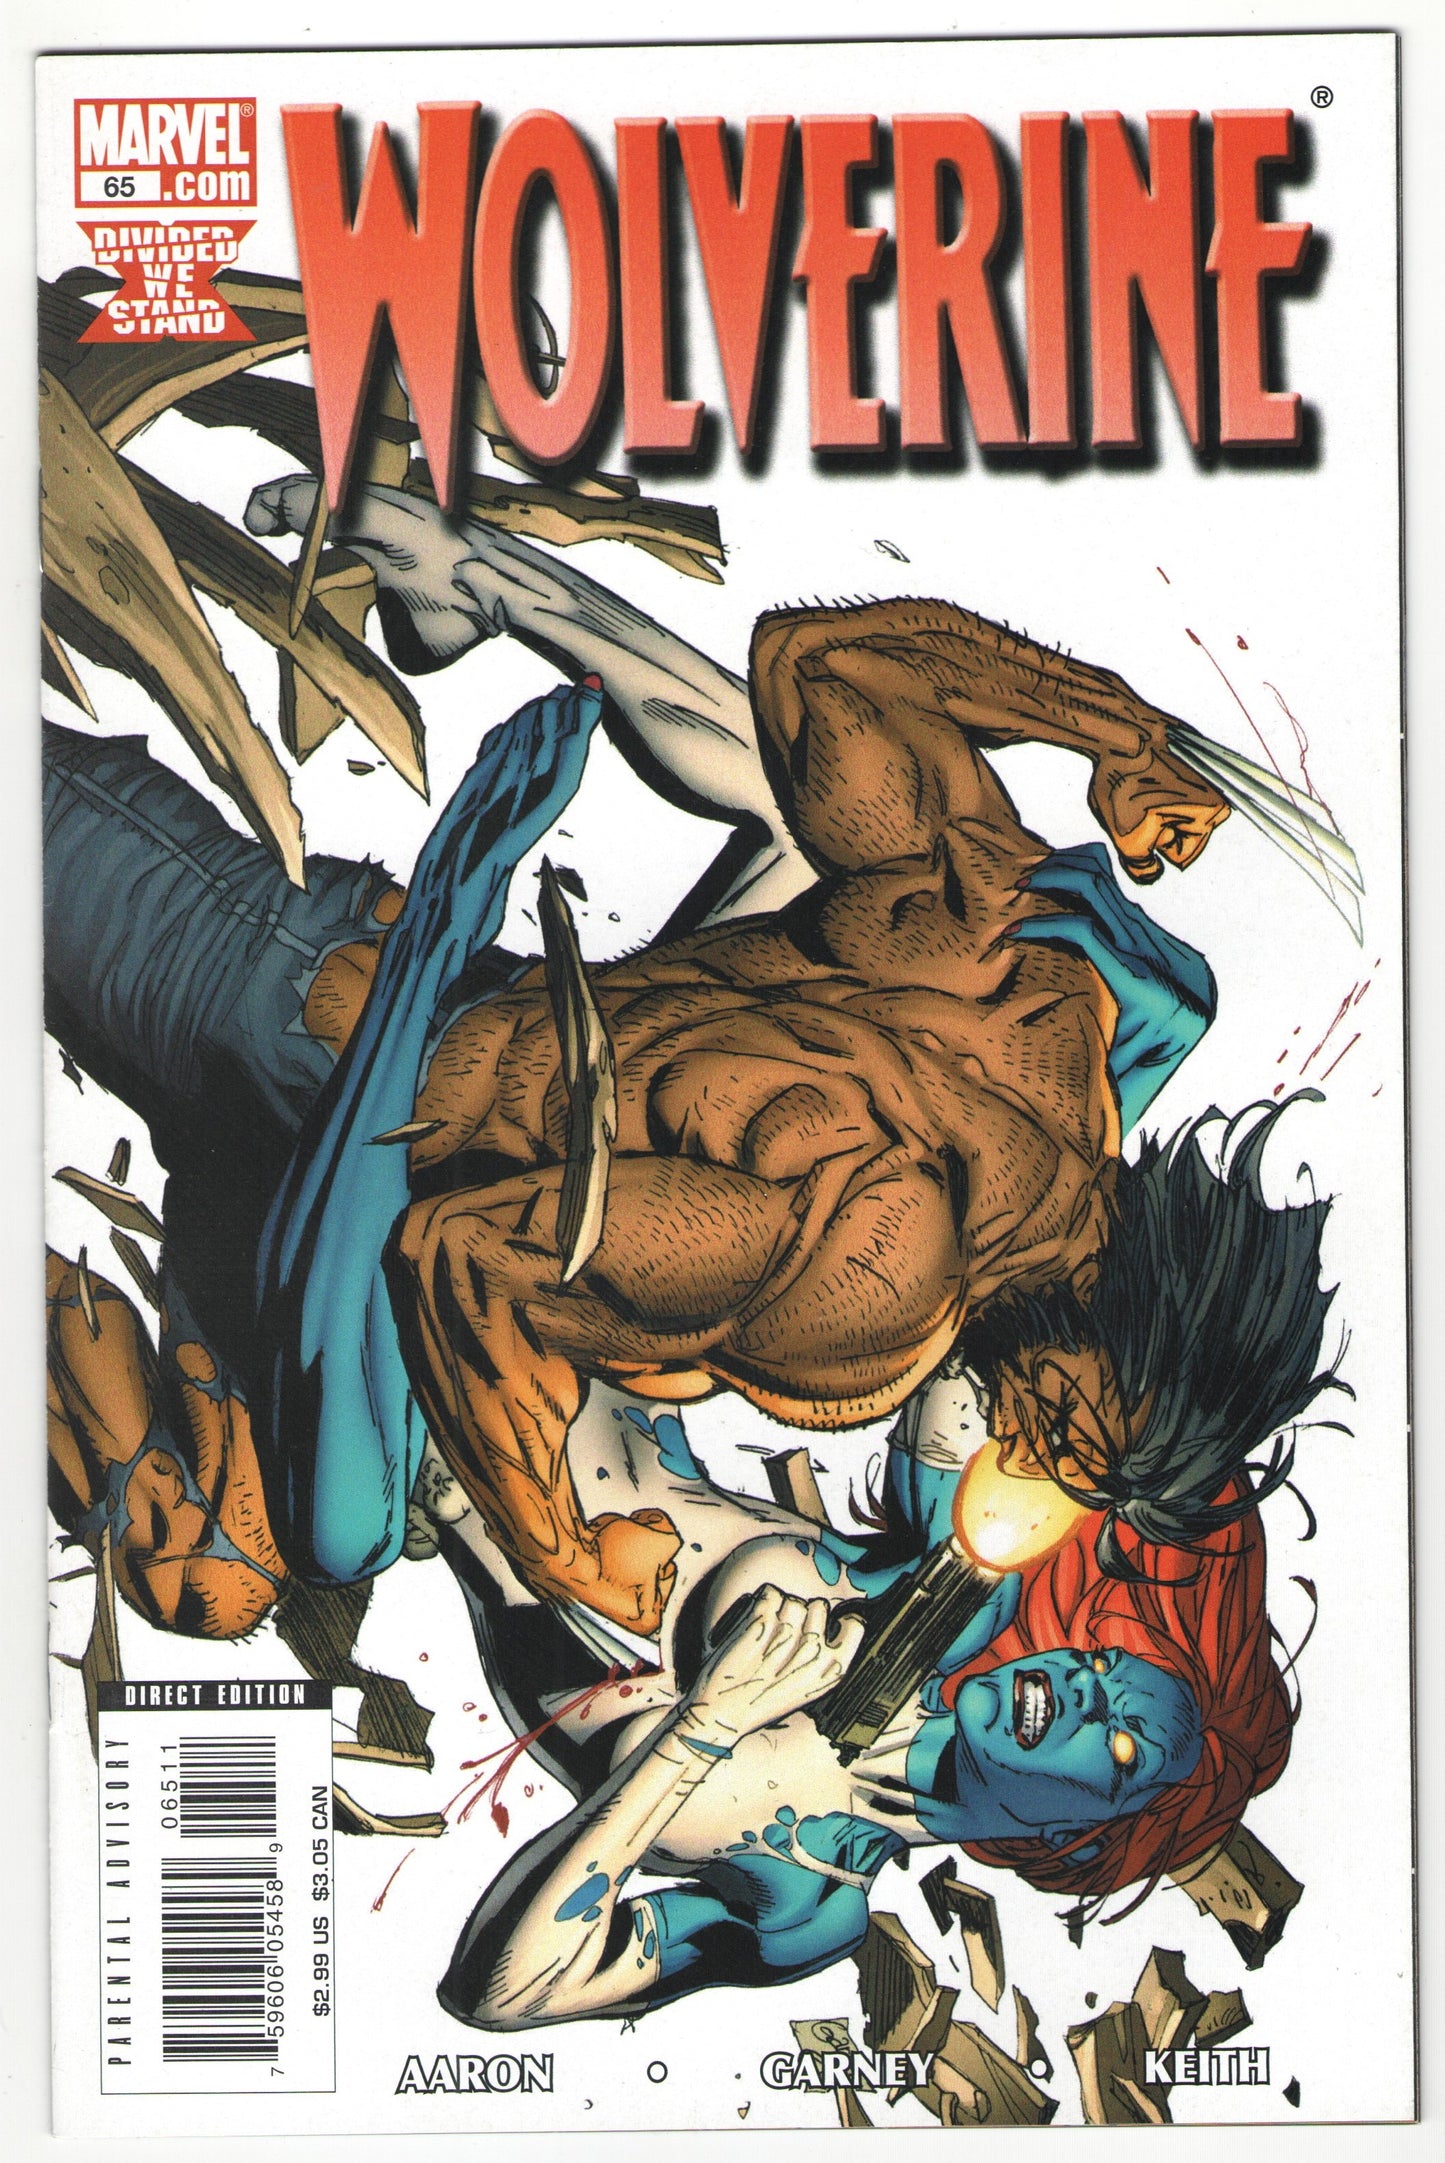 Wolverine #62-65 “Get Mystique” Complete Story Arc (2008)